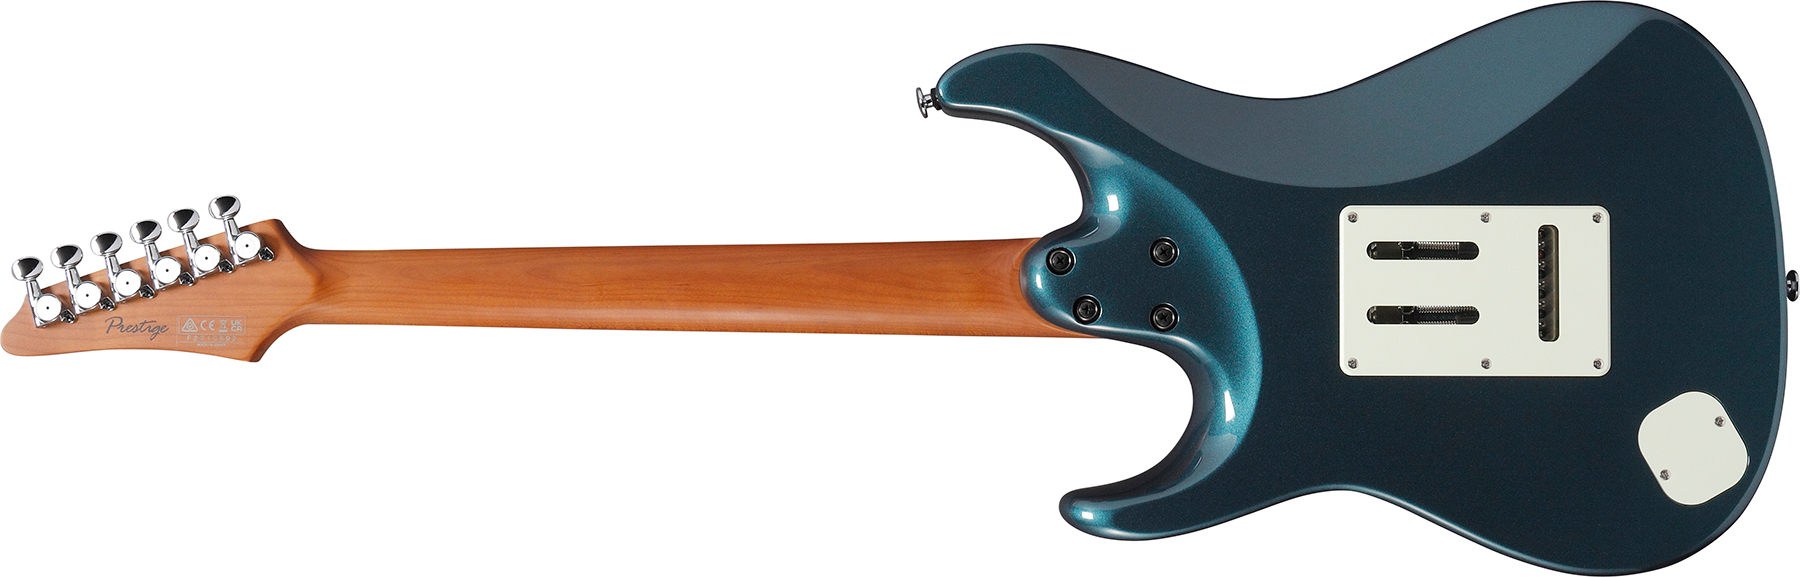 Ibanez Az2203n Atq Prestige Jap 3s Seymour Duncan Trem Rw - Antique Turquoise - E-Gitarre in Str-Form - Variation 1